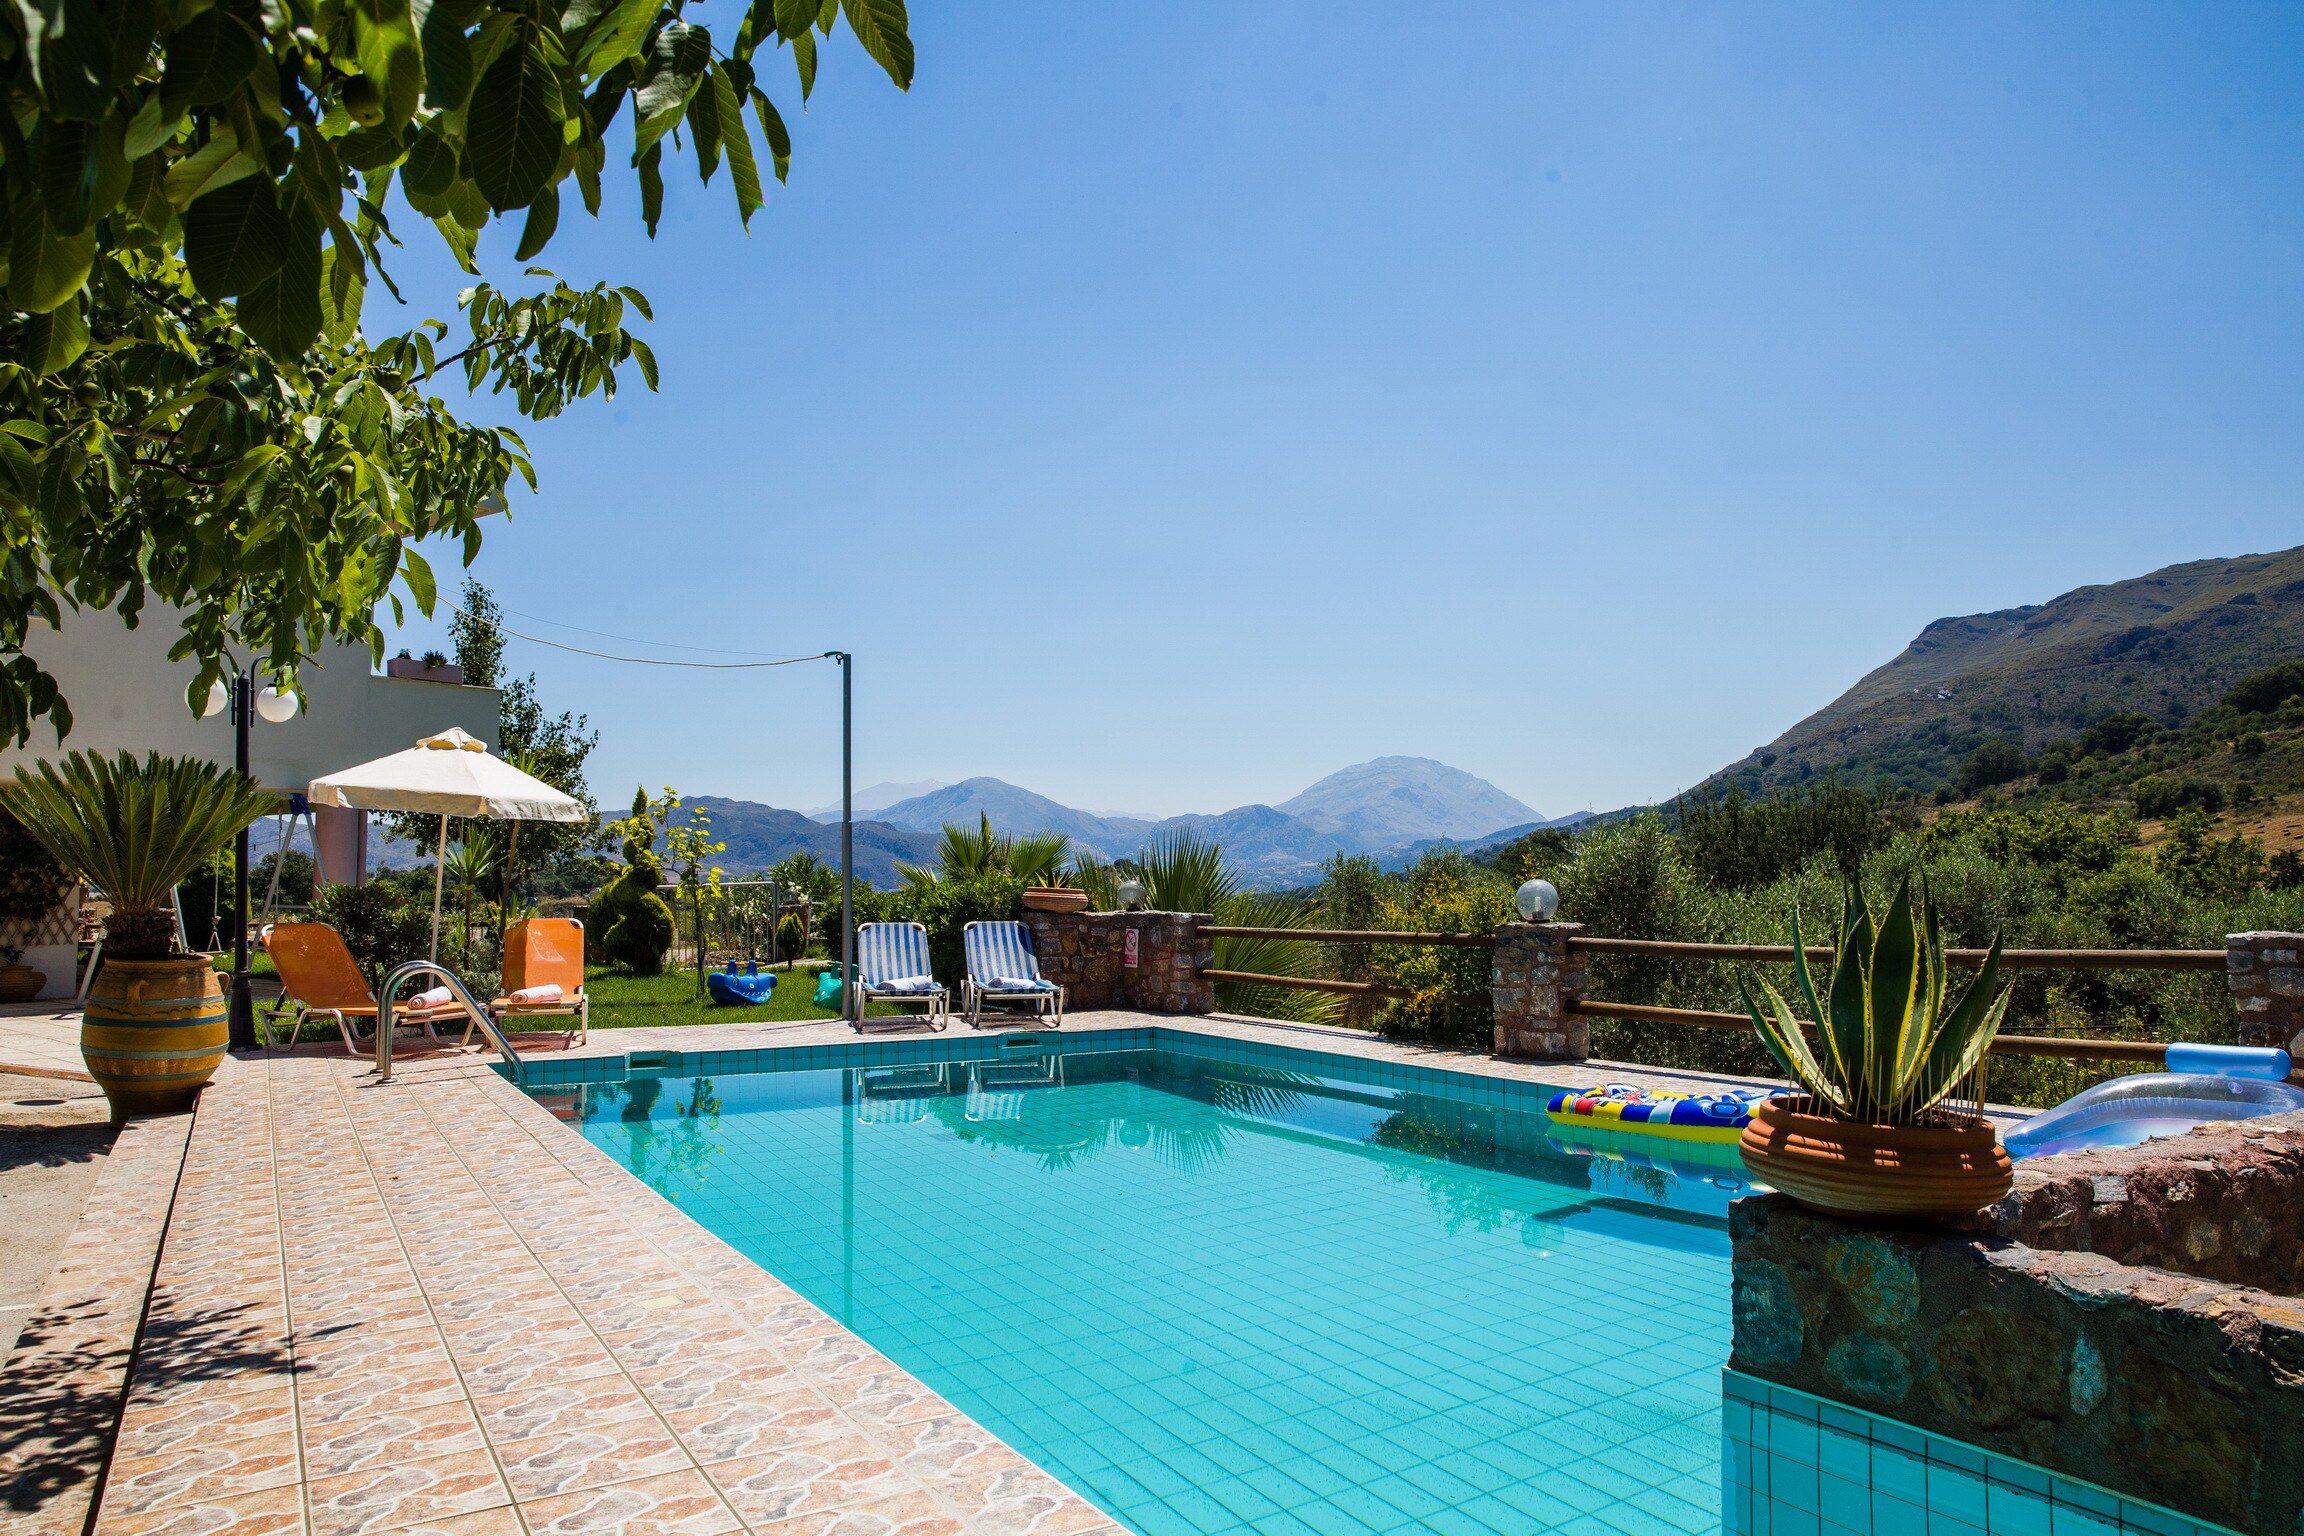 Private pool villa in beautiful countryside, Swimming pool area